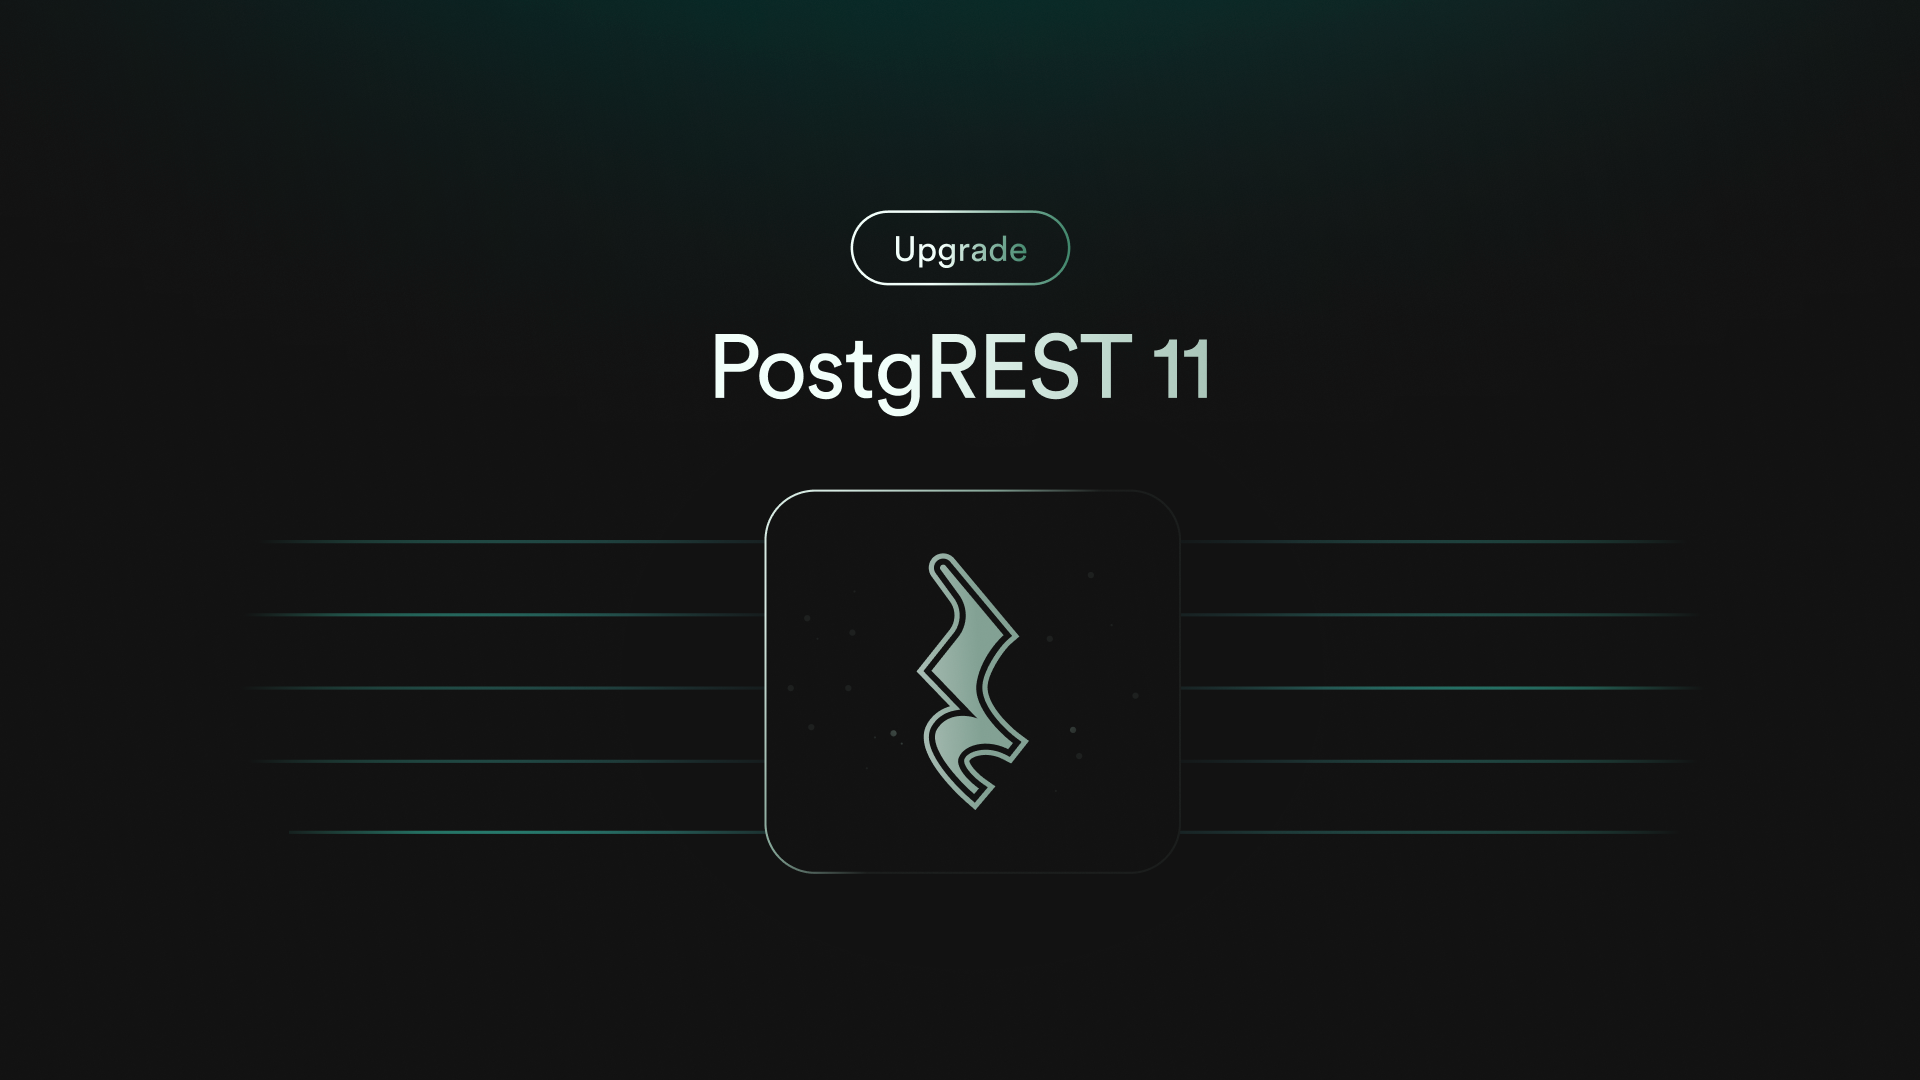 PostgREST 11 pre-release